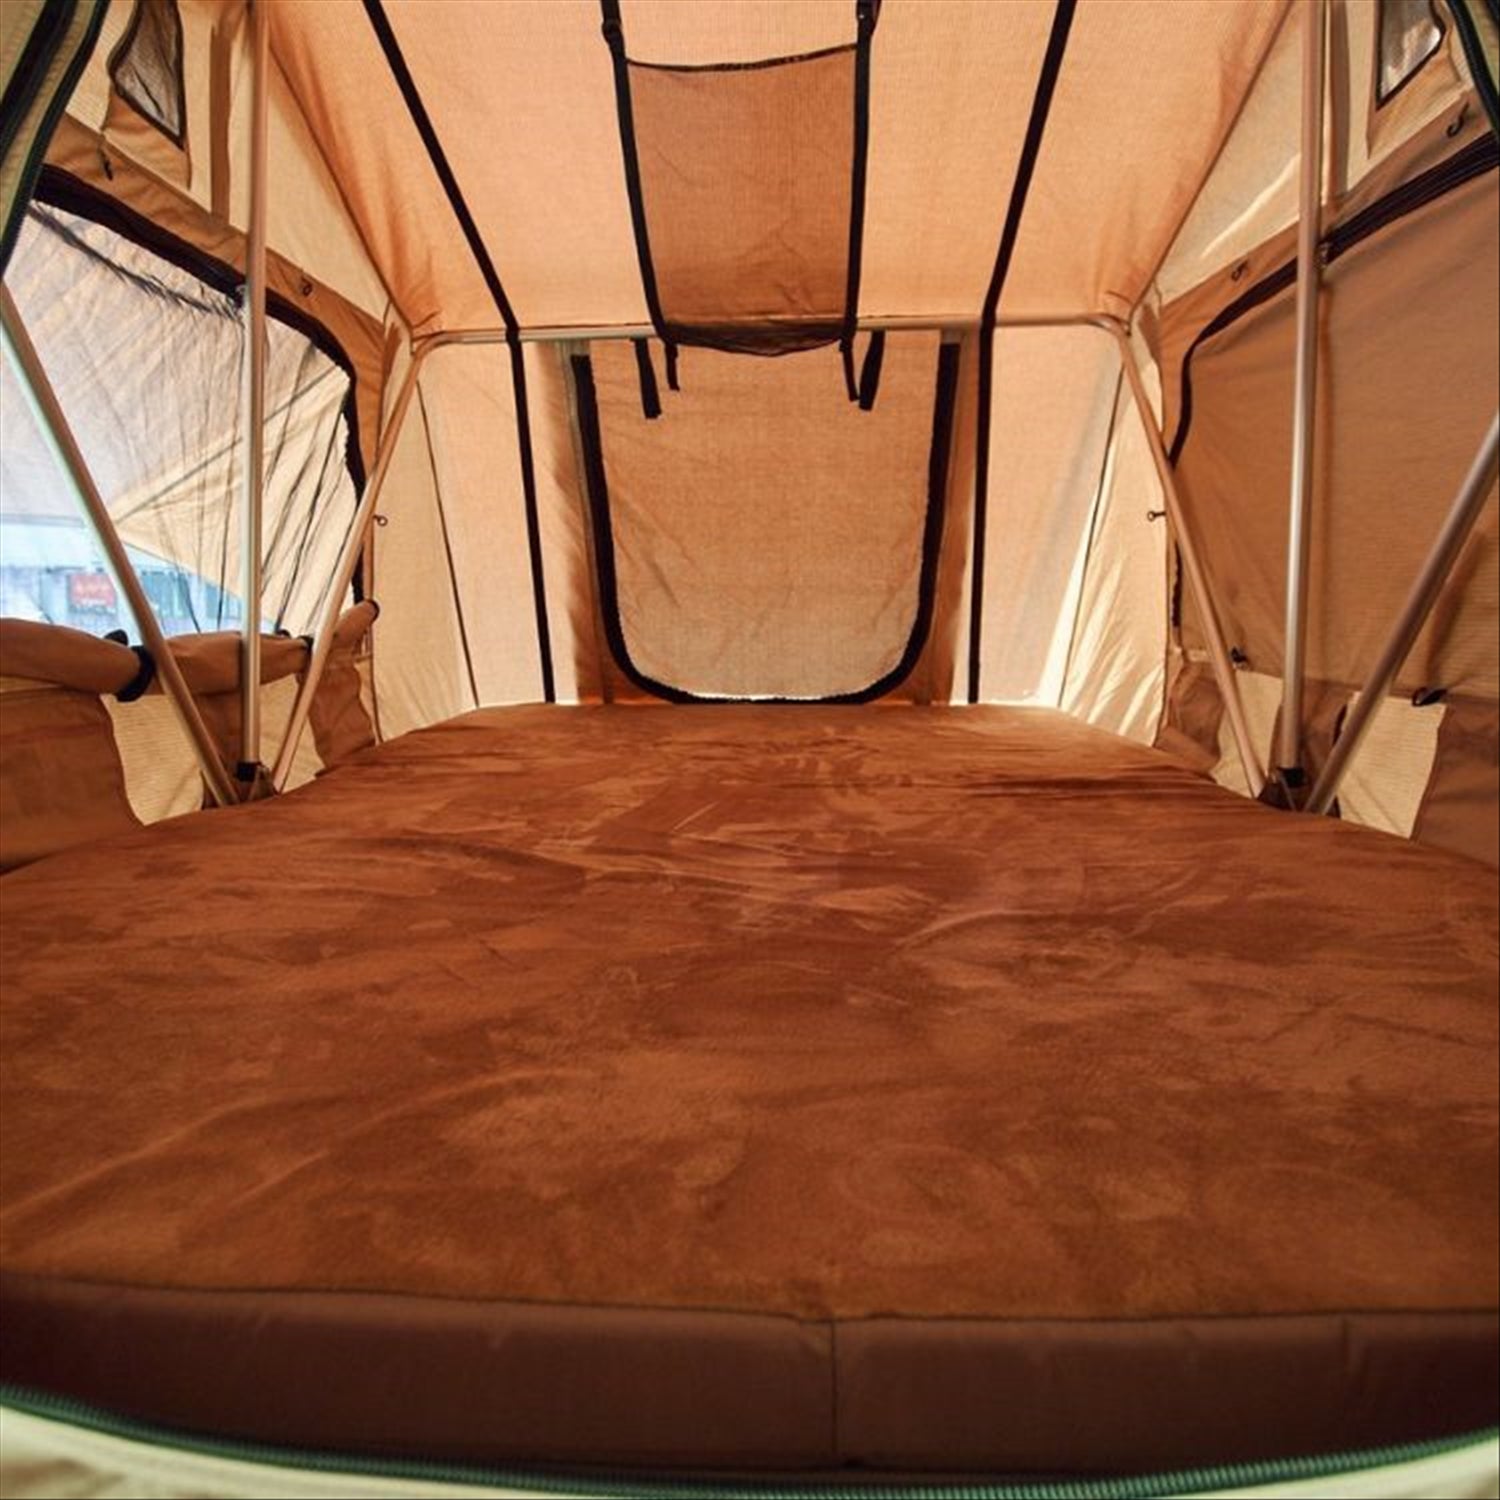 Orson Orson A2X Roof Top Tent with Annex - 180-200cm